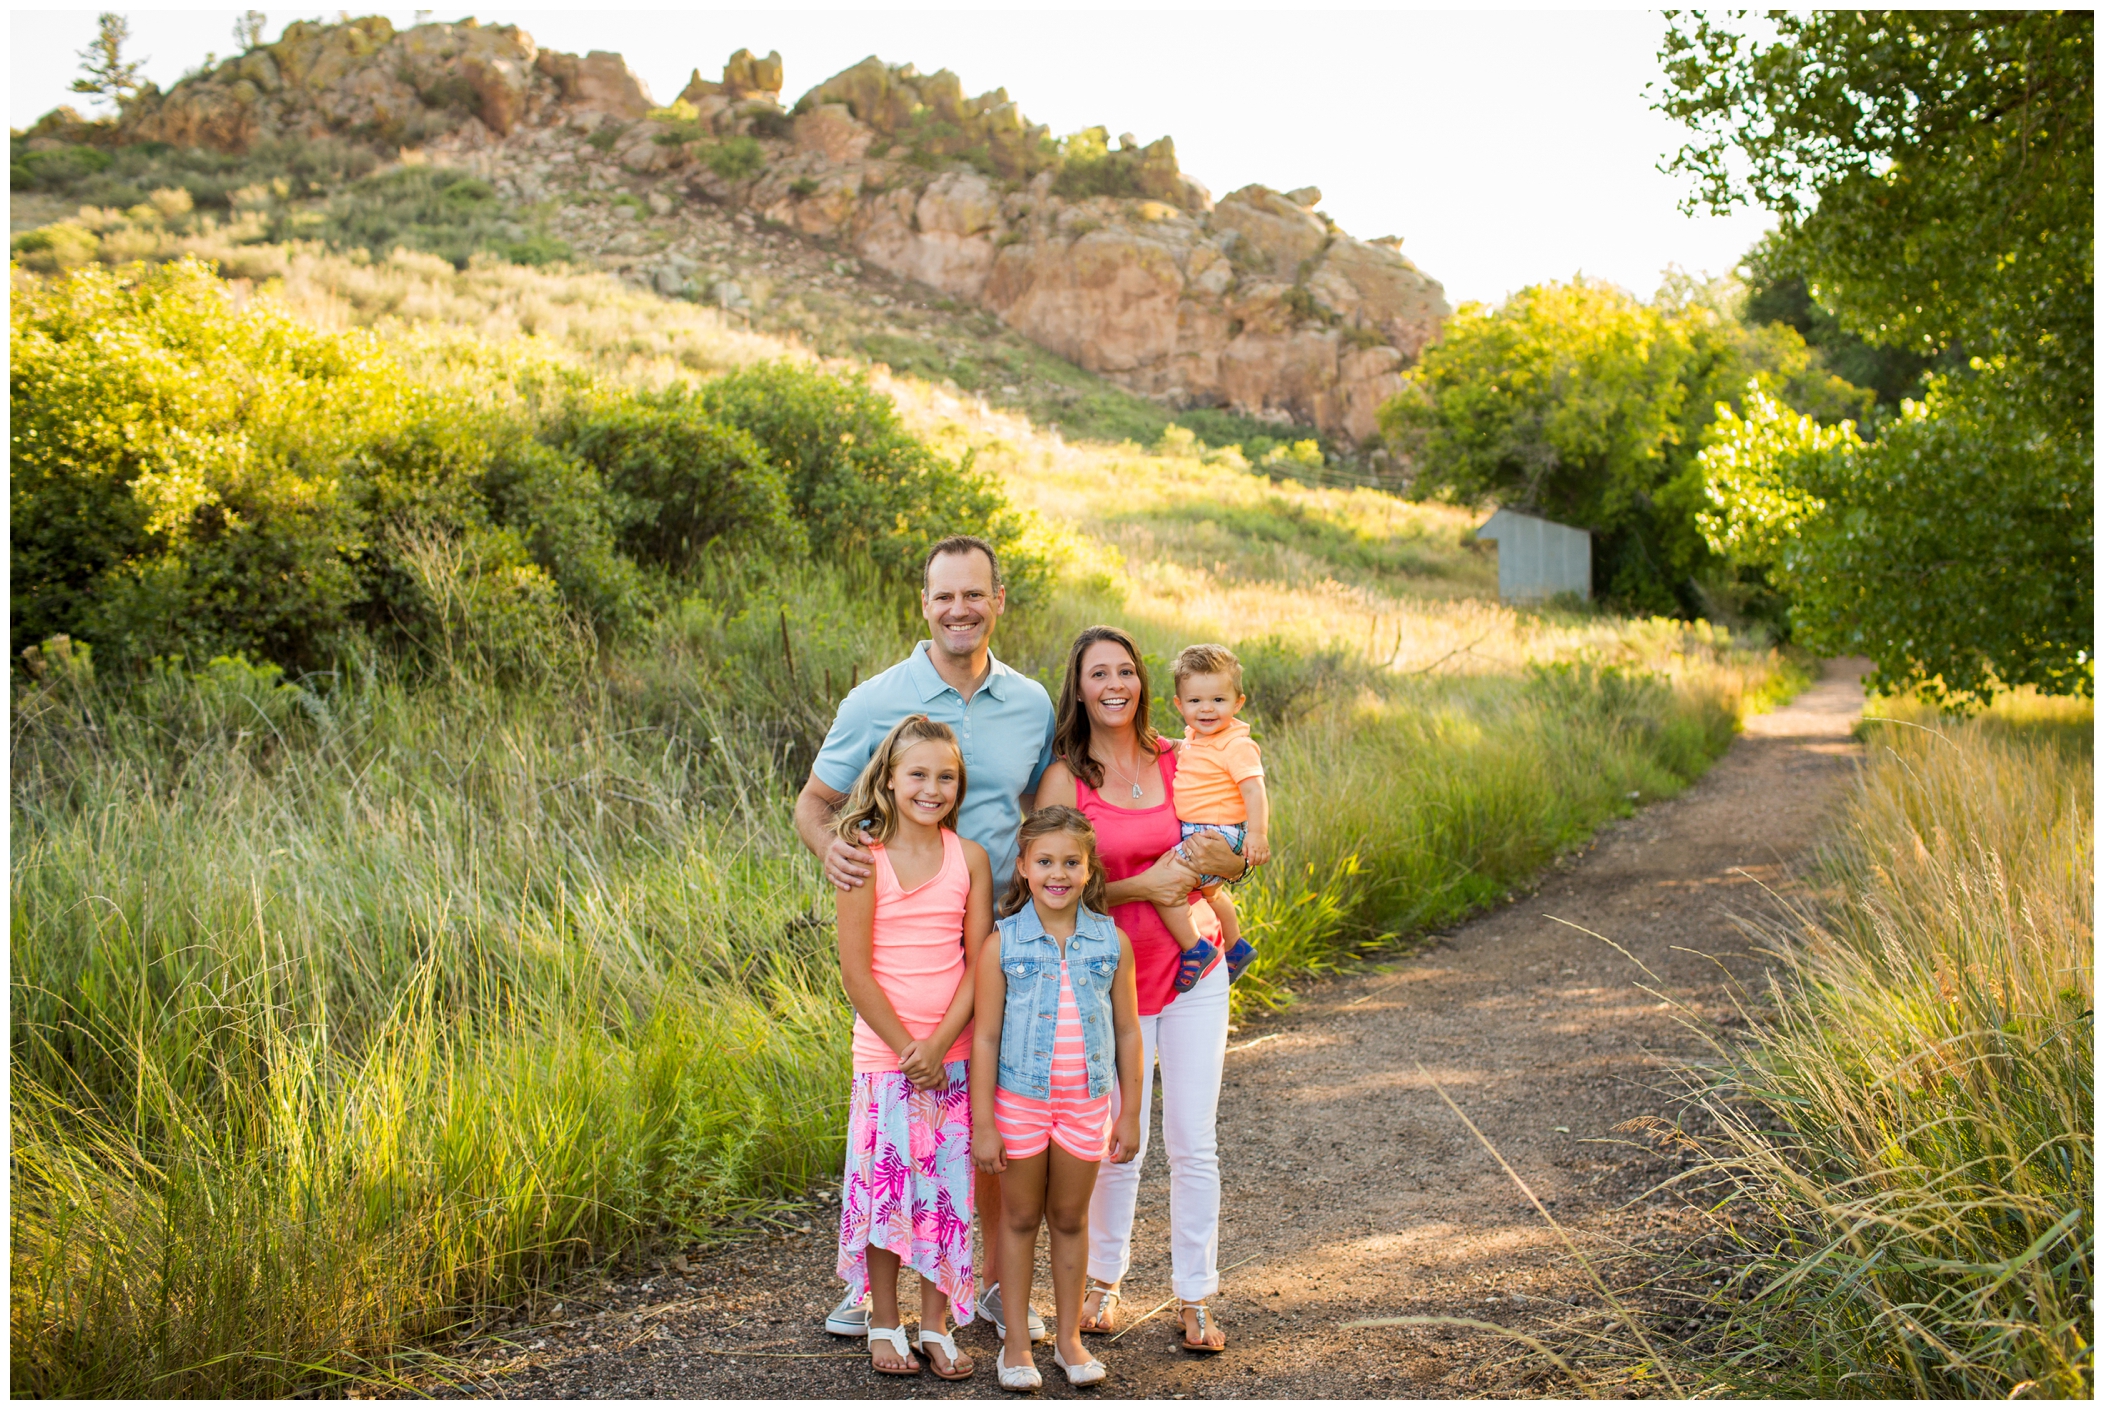 Loveland family photographs at Devil's Backbone by Colorado photographer Plum Pretty Photography 